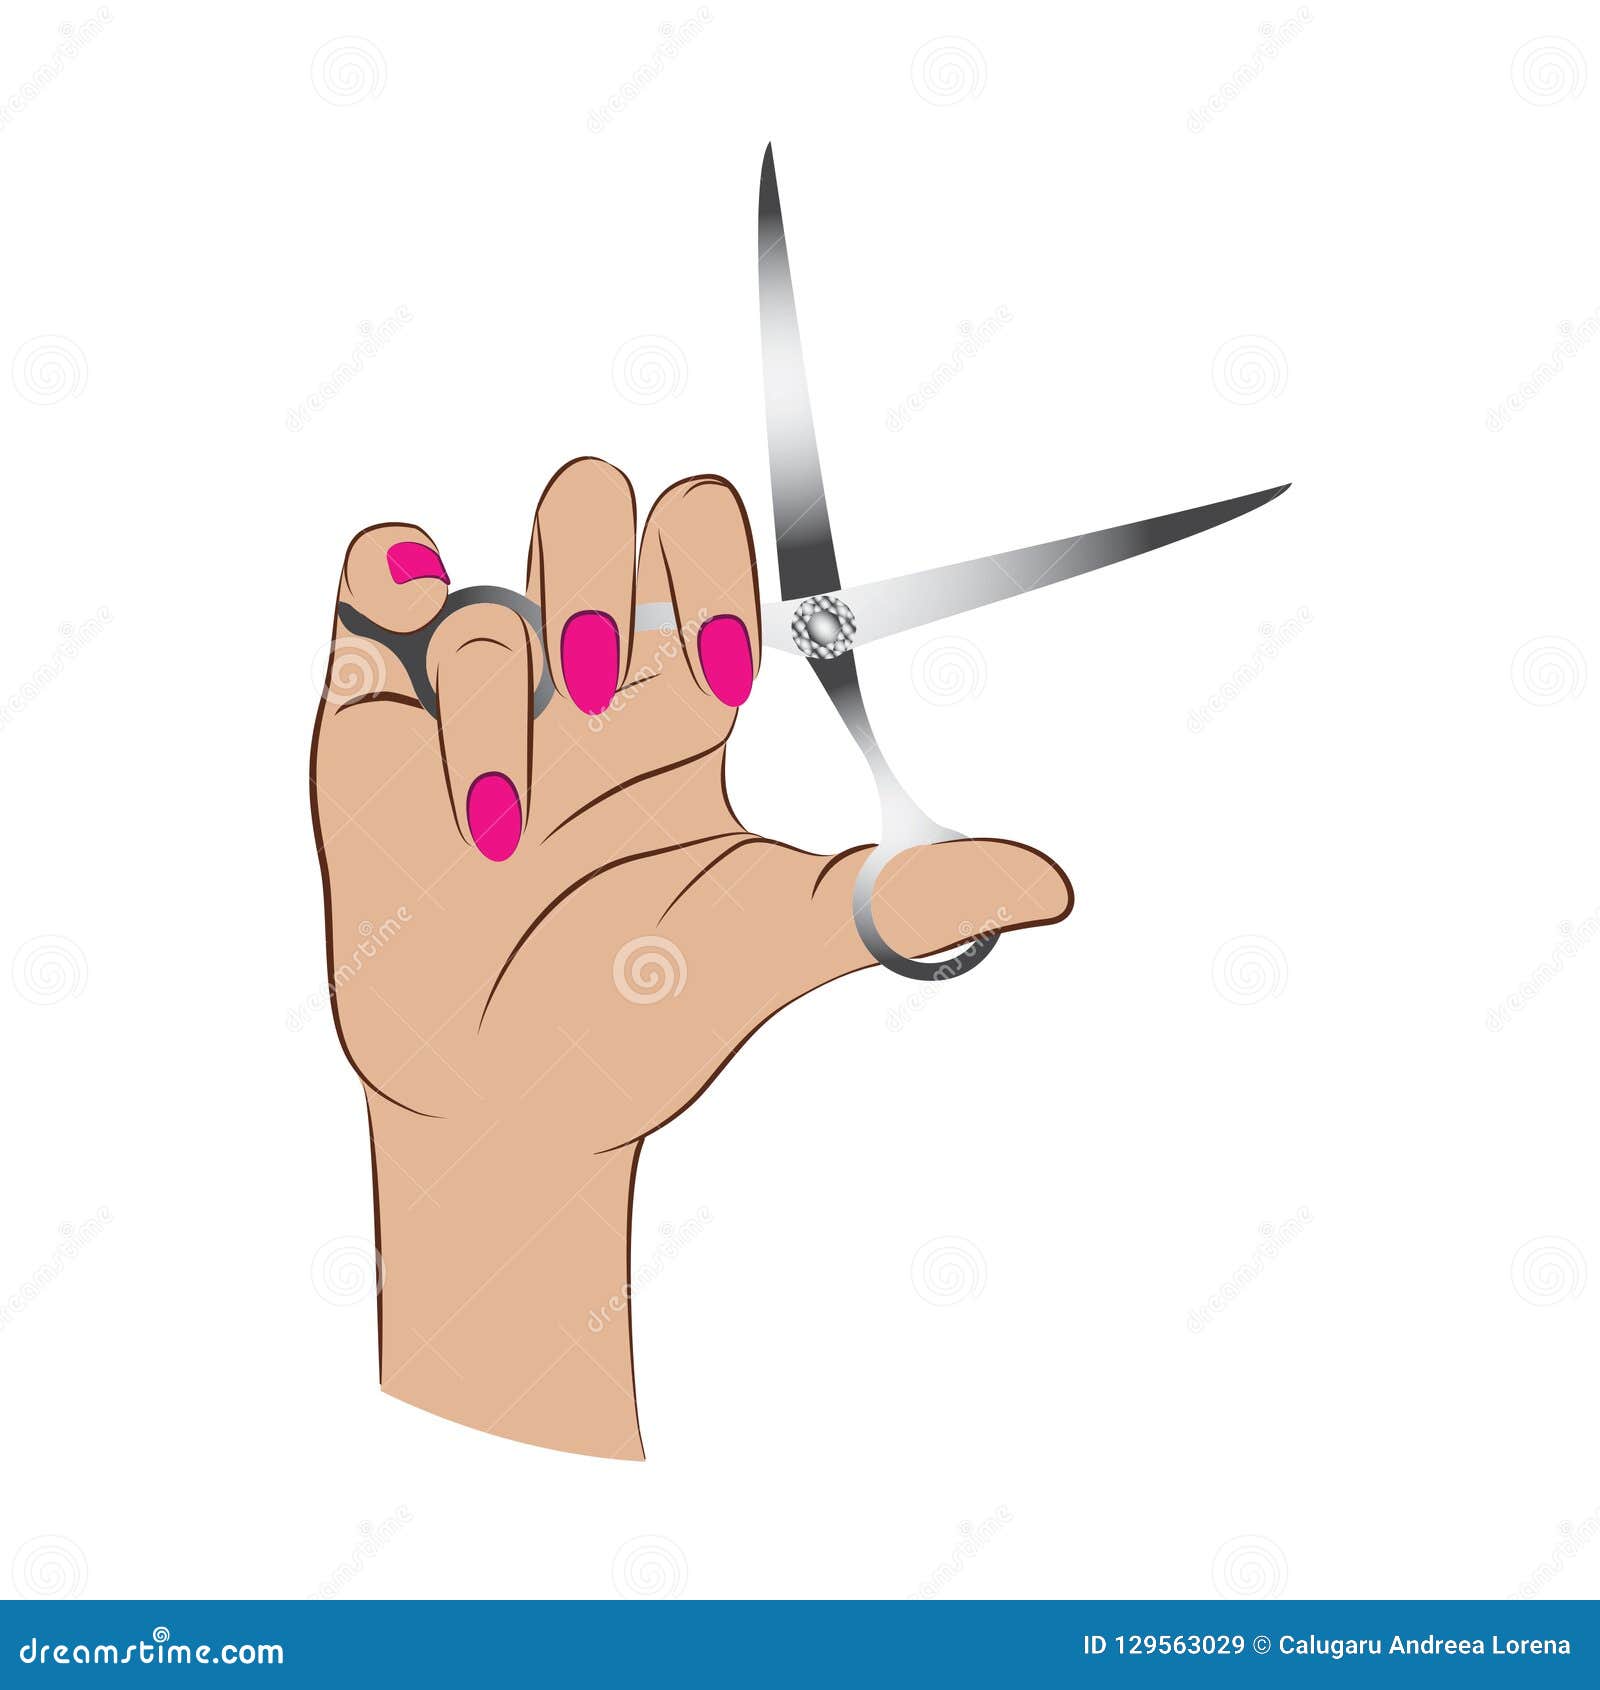 women hand holding shears